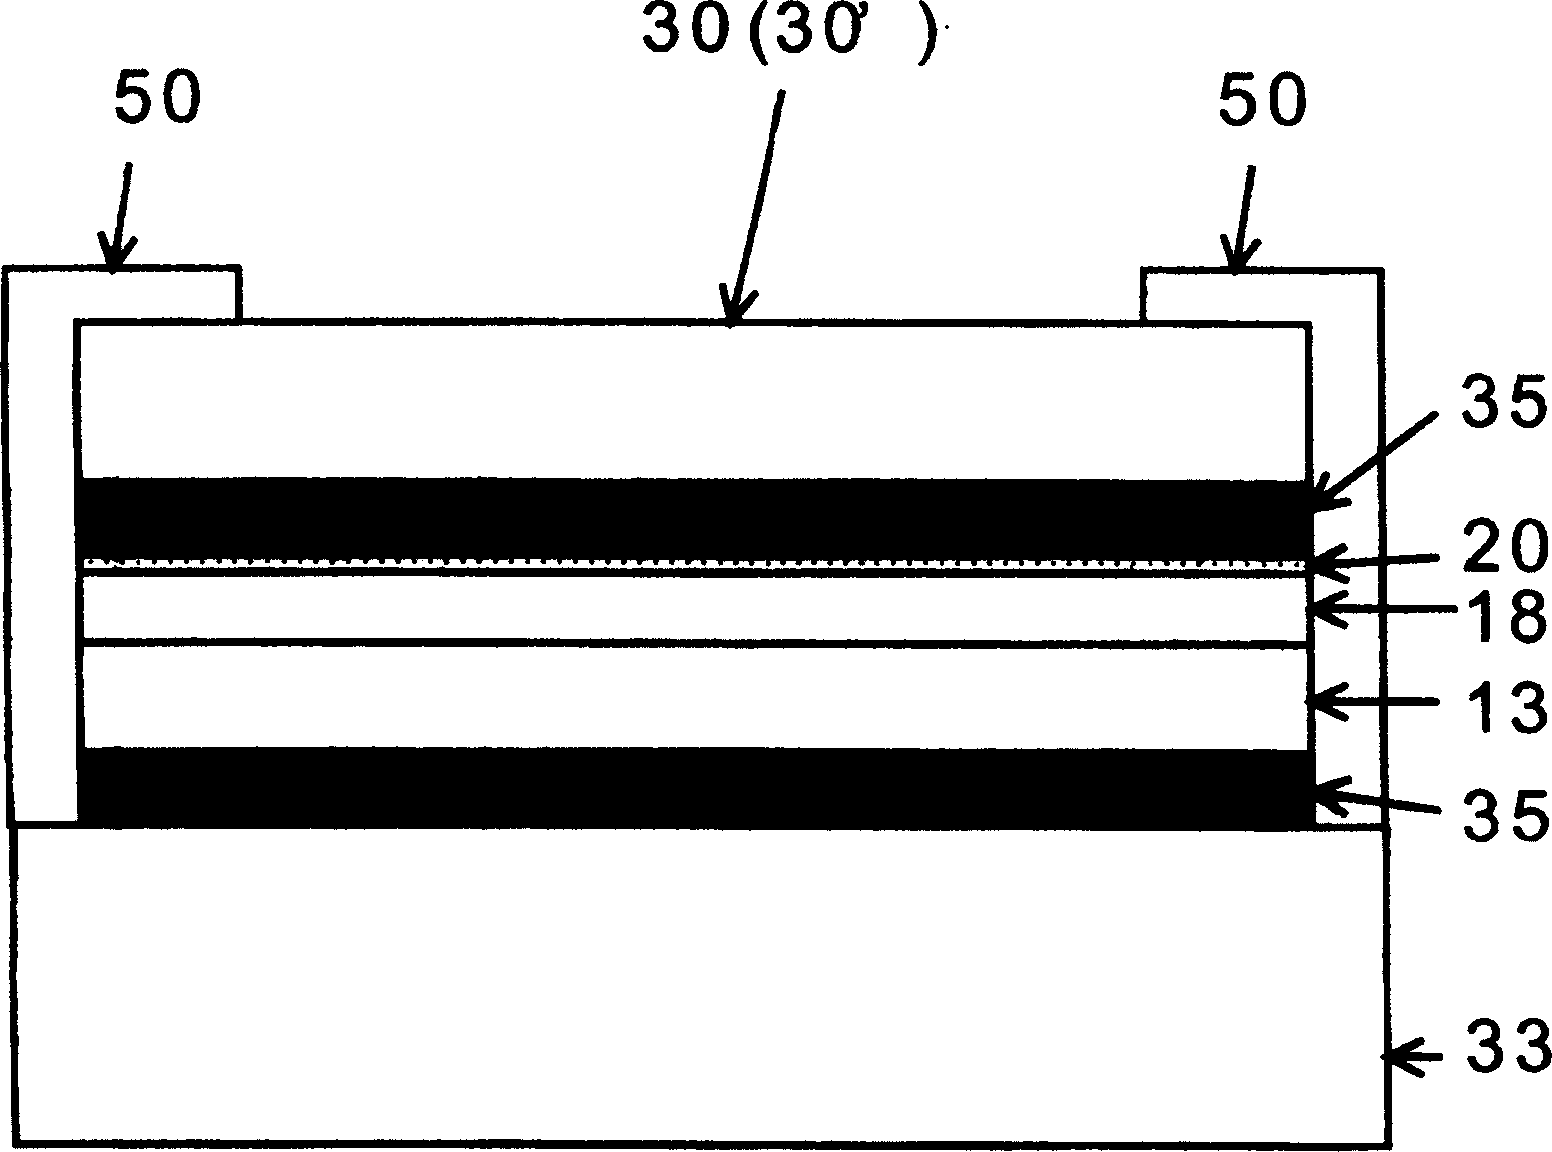 Laminate and filter of display using the same laminate